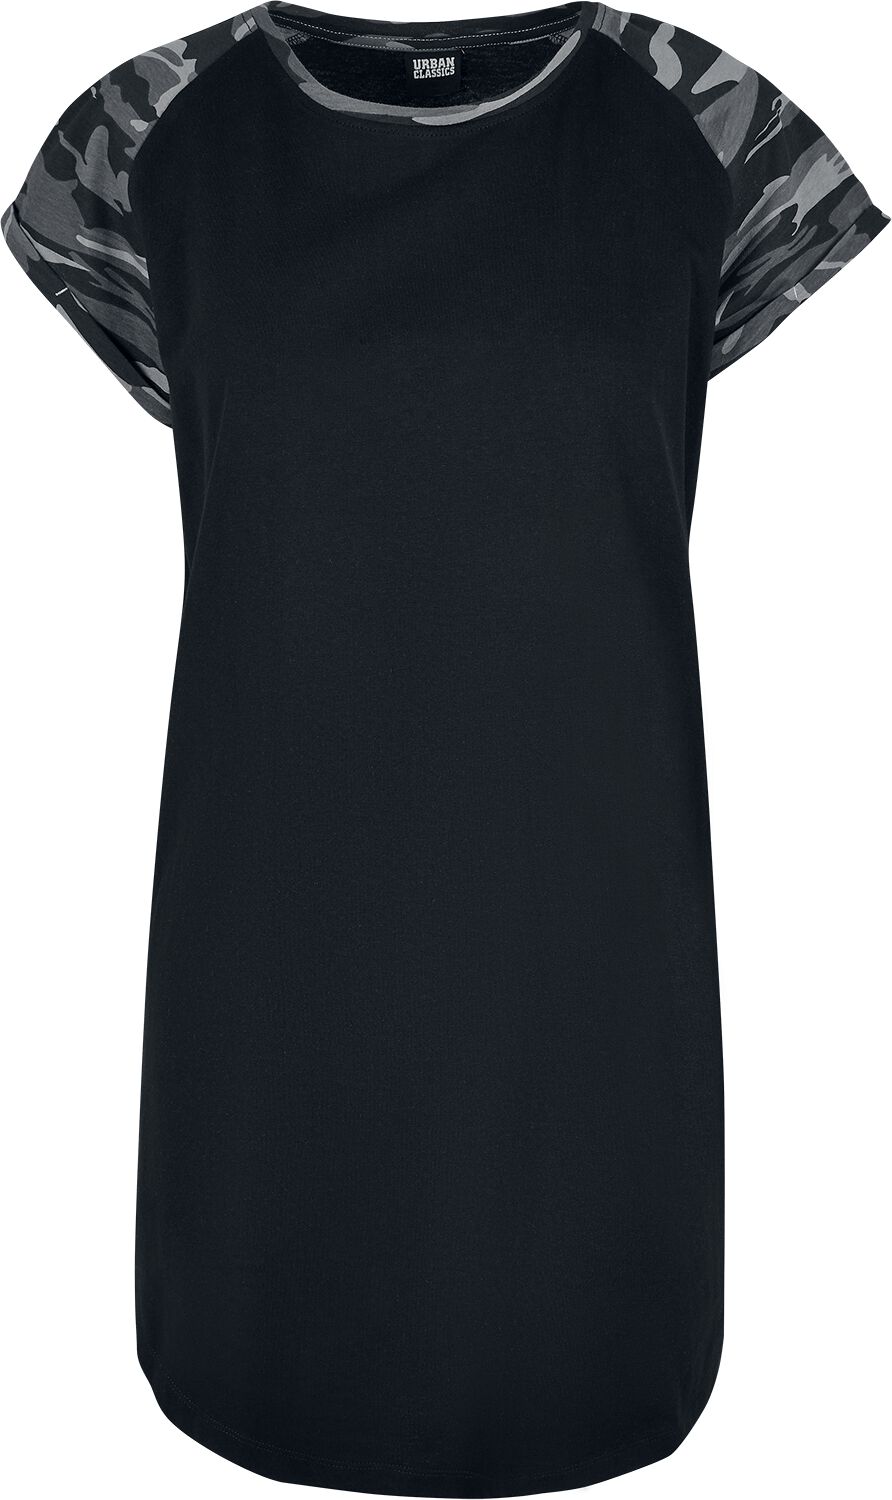 Urban Classics Ladies Contrast Raglan Tee Dress Short dress black camo